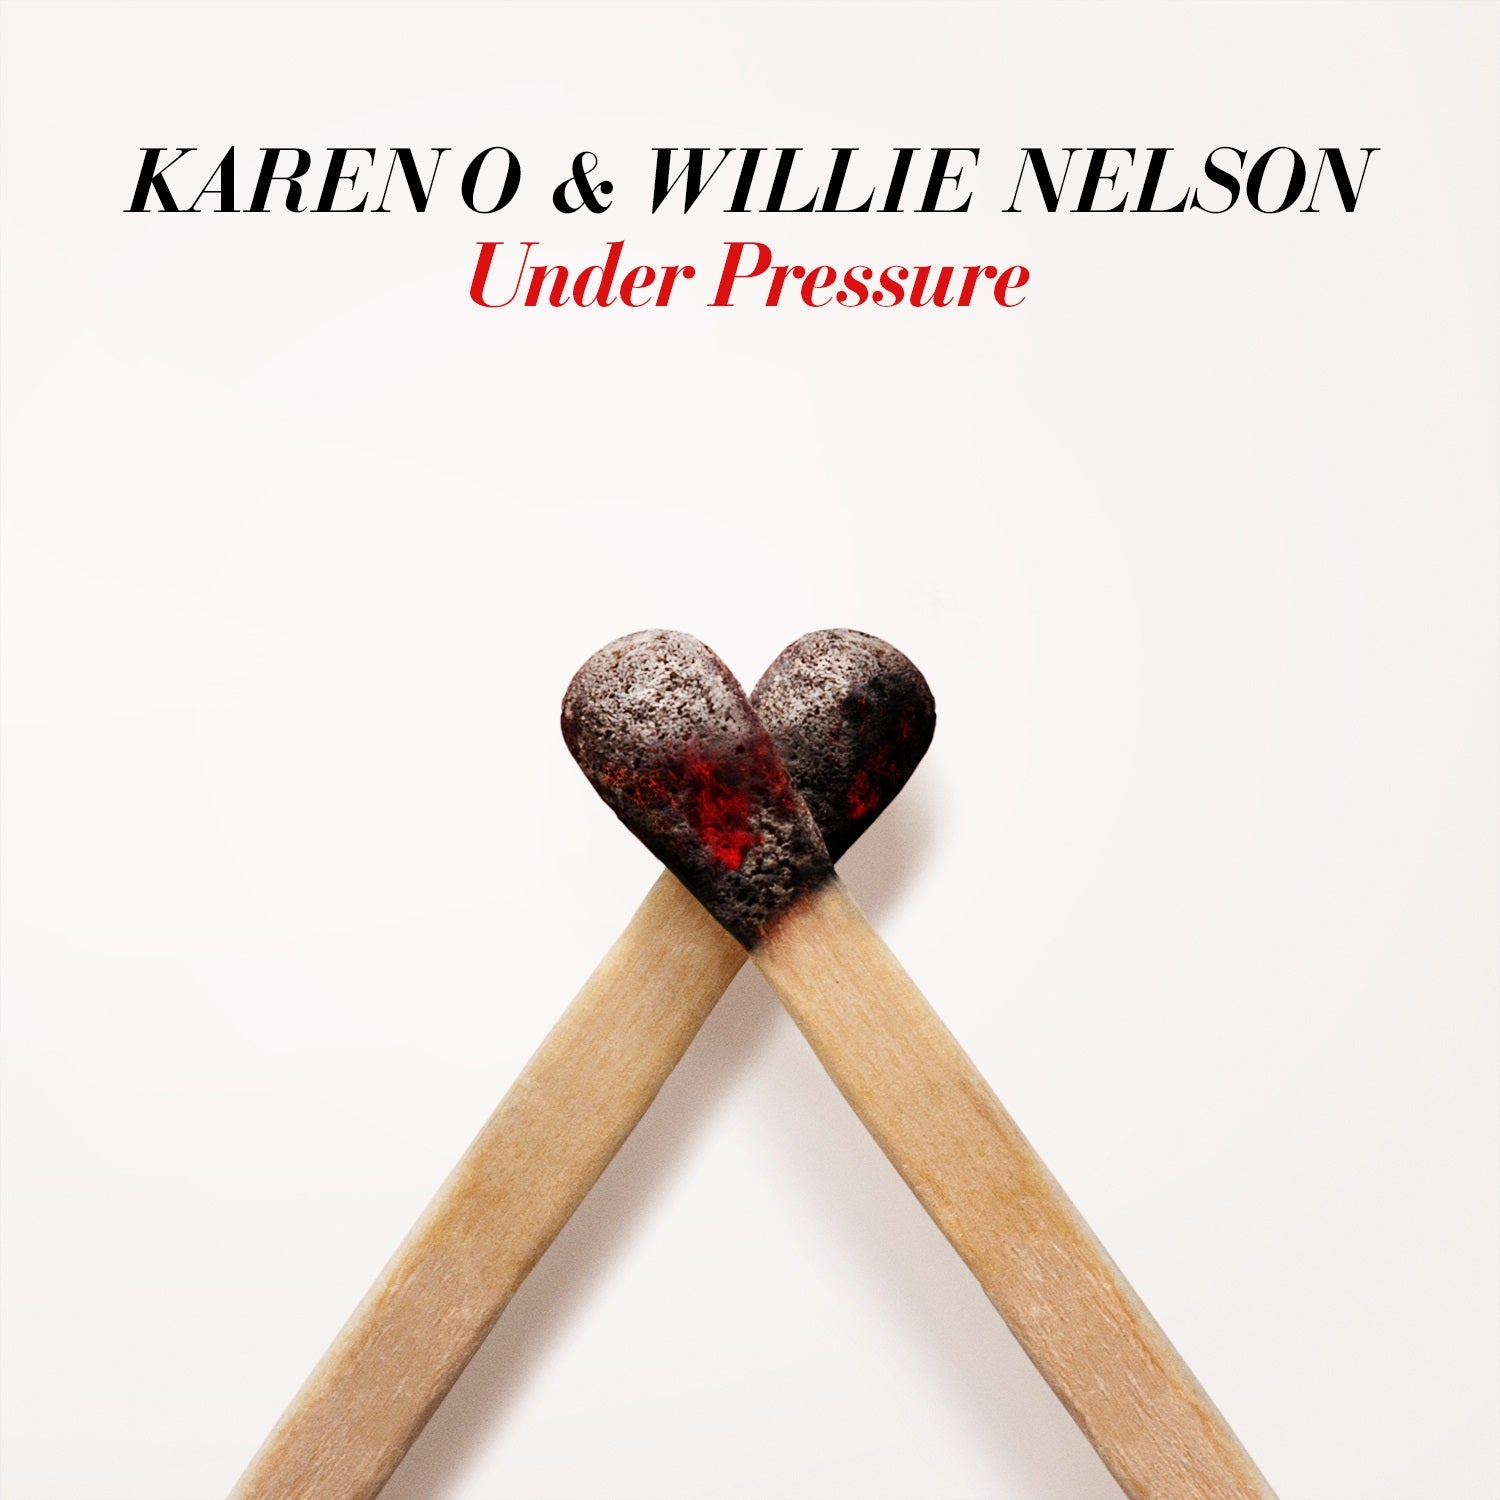 Karen O & Willie Nelson - Under Pressure [7" Vinyl]